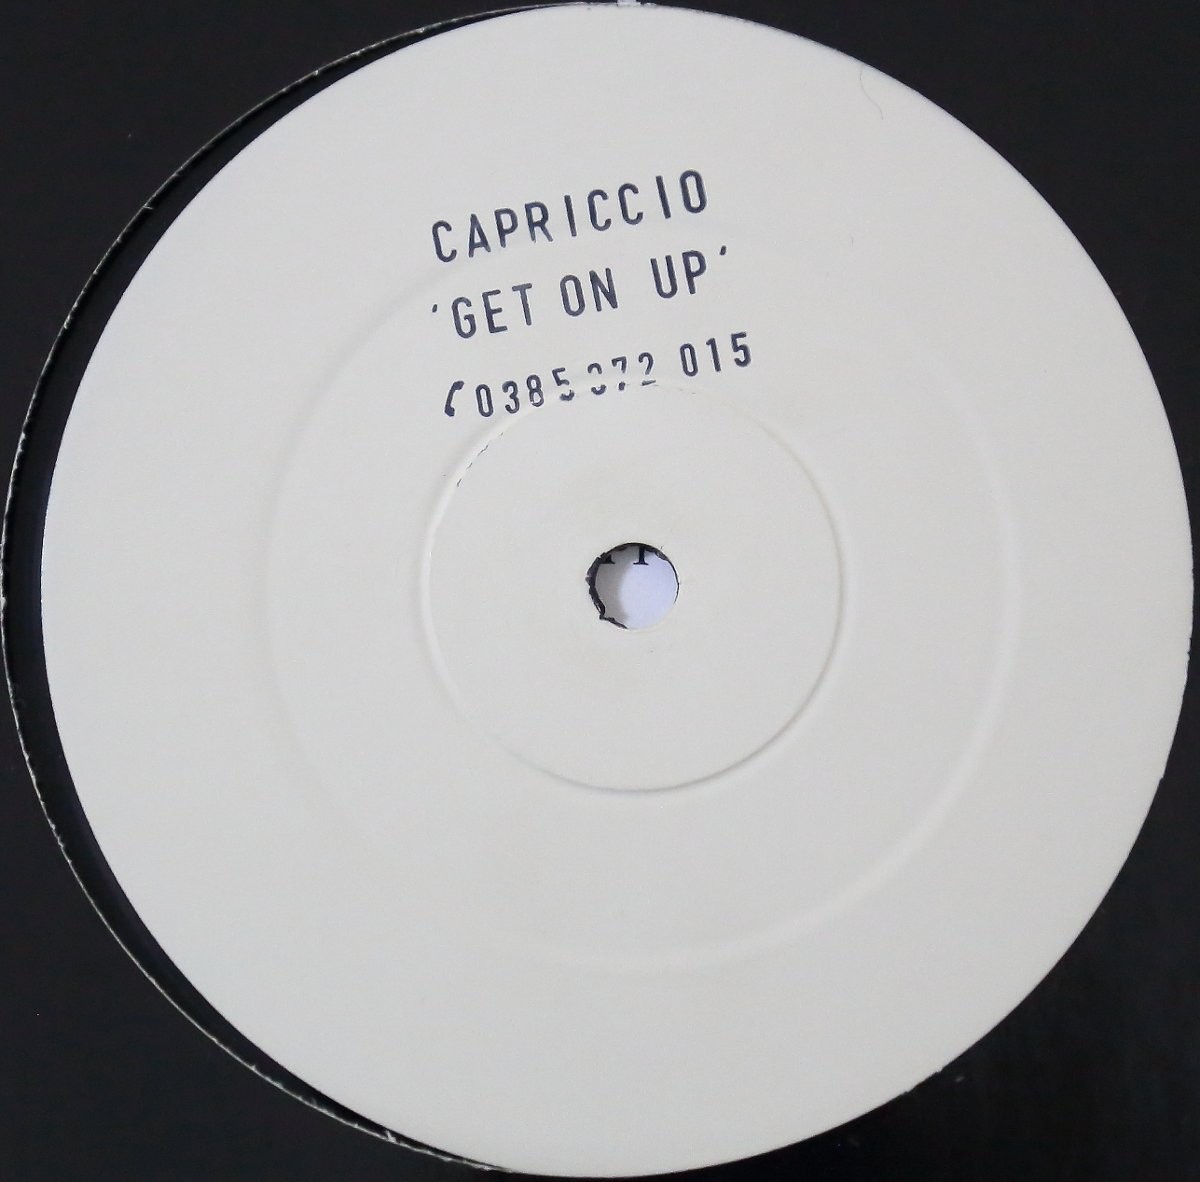 Capriccio - Get on up (Vocal Mix / Dub Mix) 12" Vinyl Promo